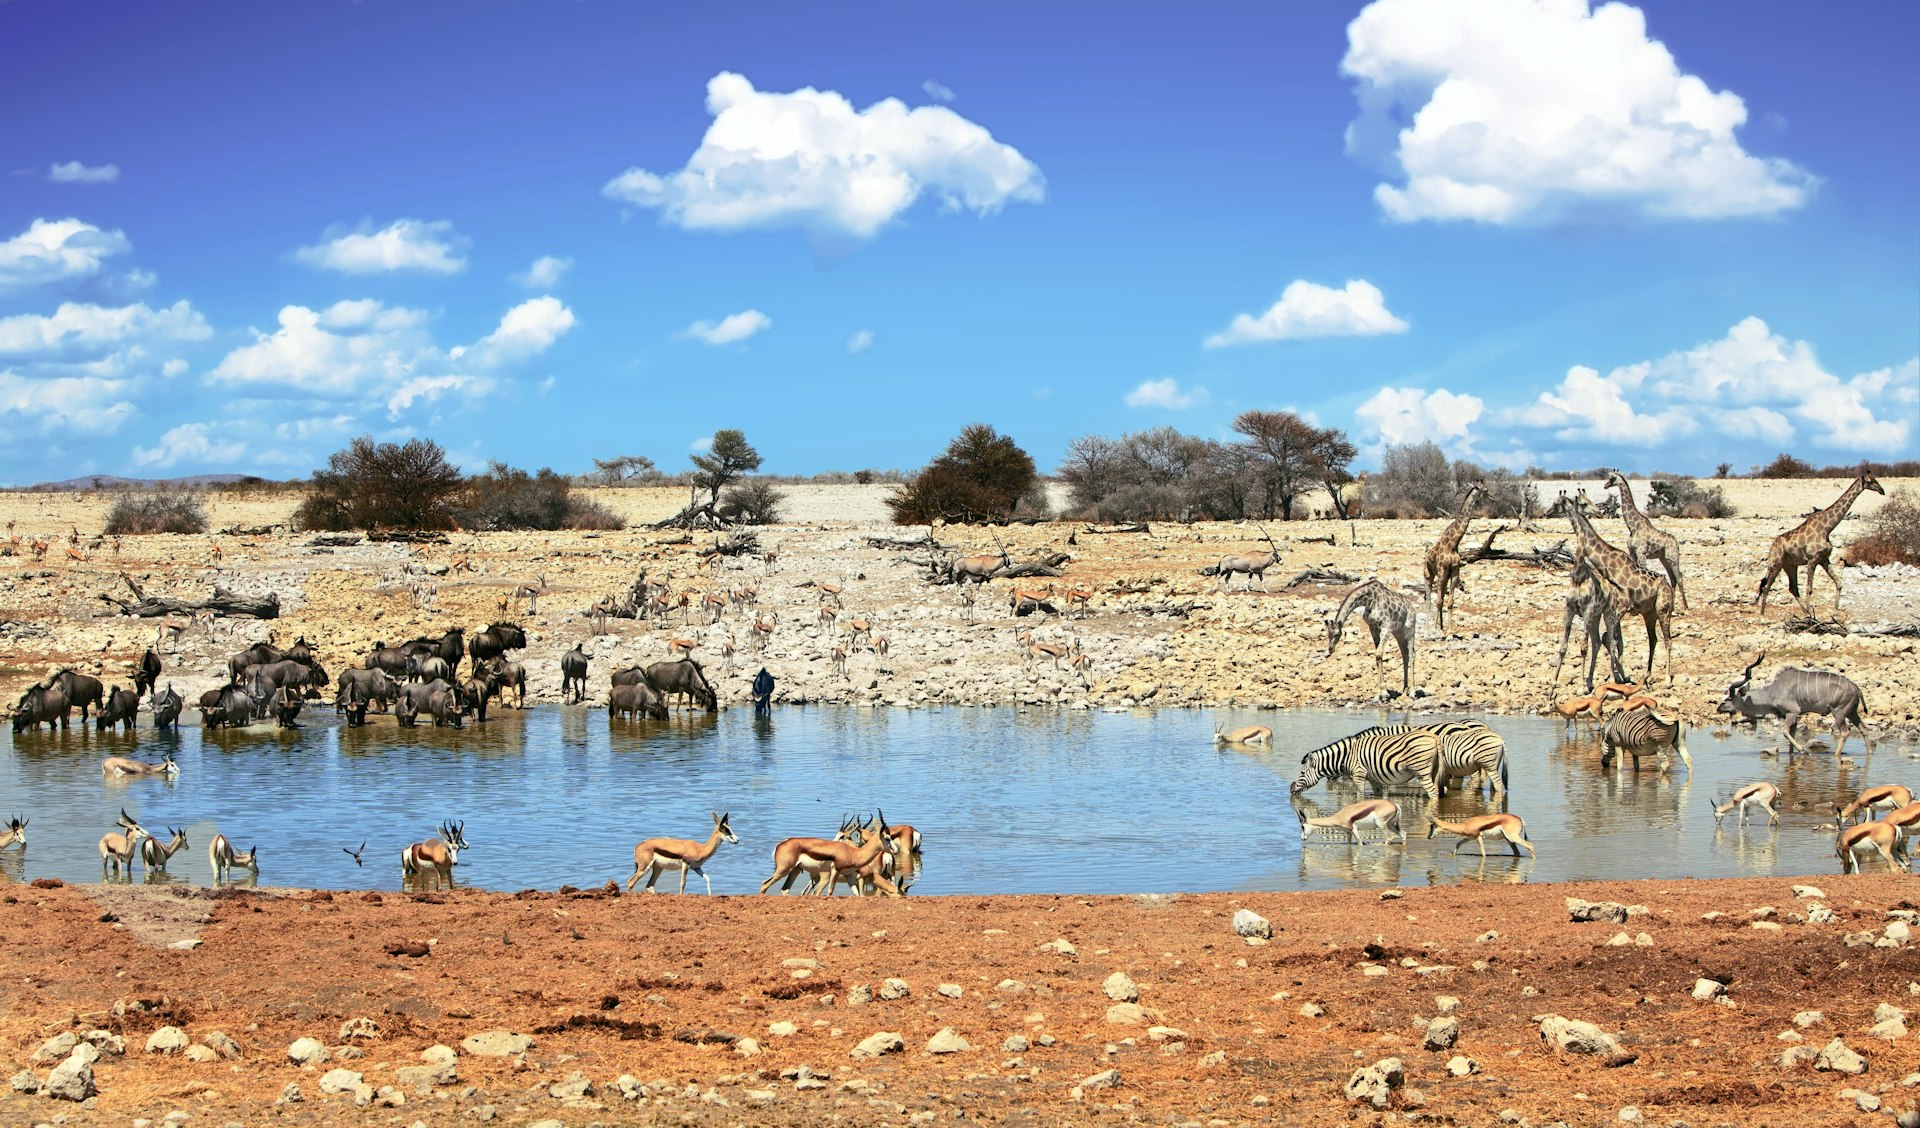 Animals, including zebra, giraffes, buffalo and deer, gather around and walk through a waterhole